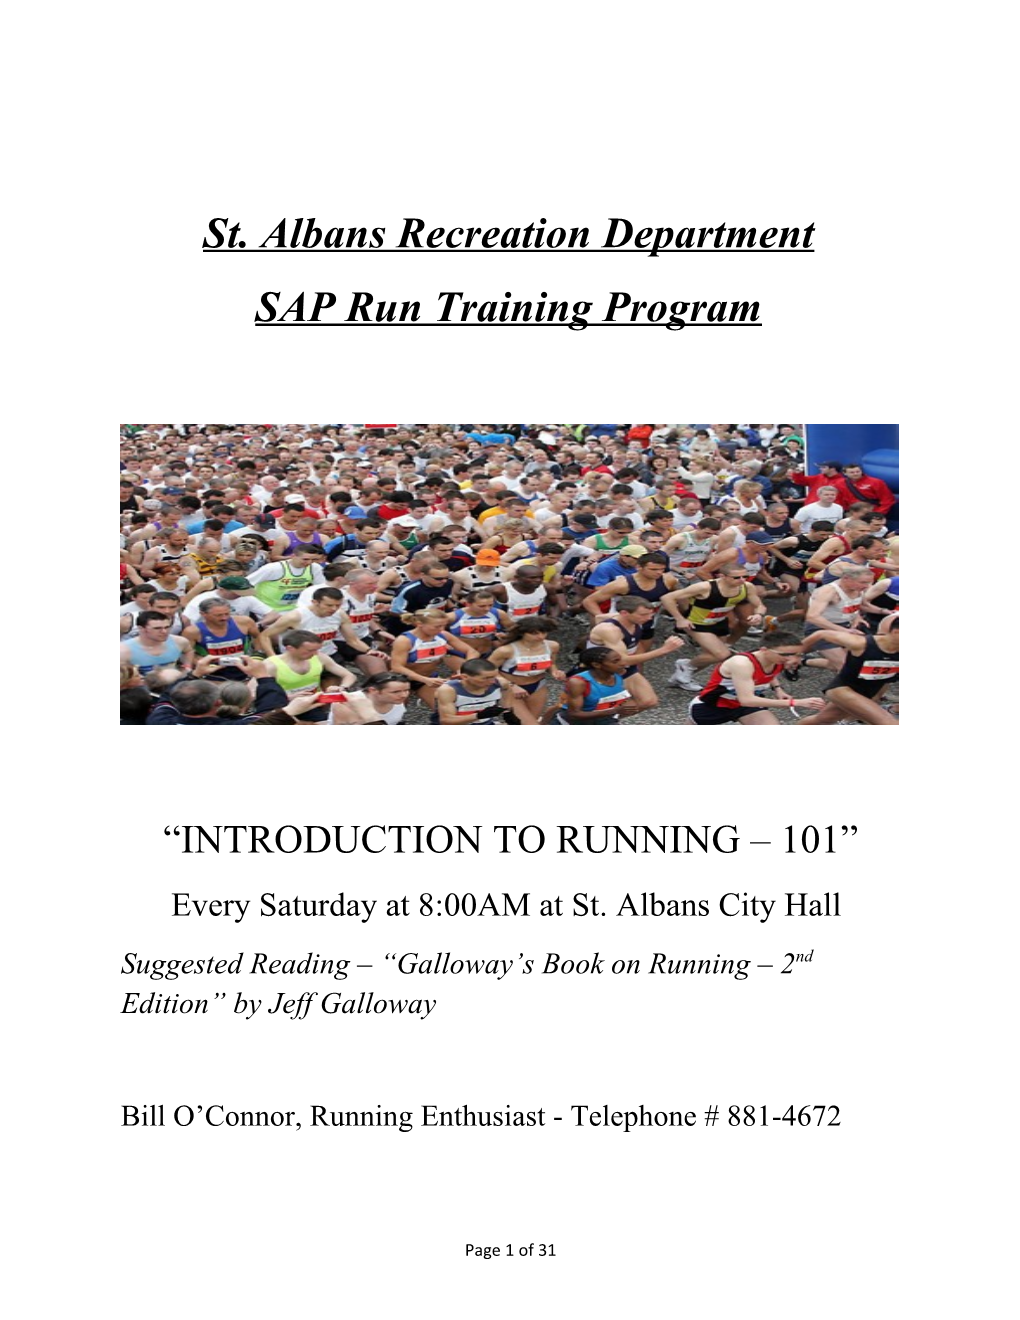 SAP Run Training Program